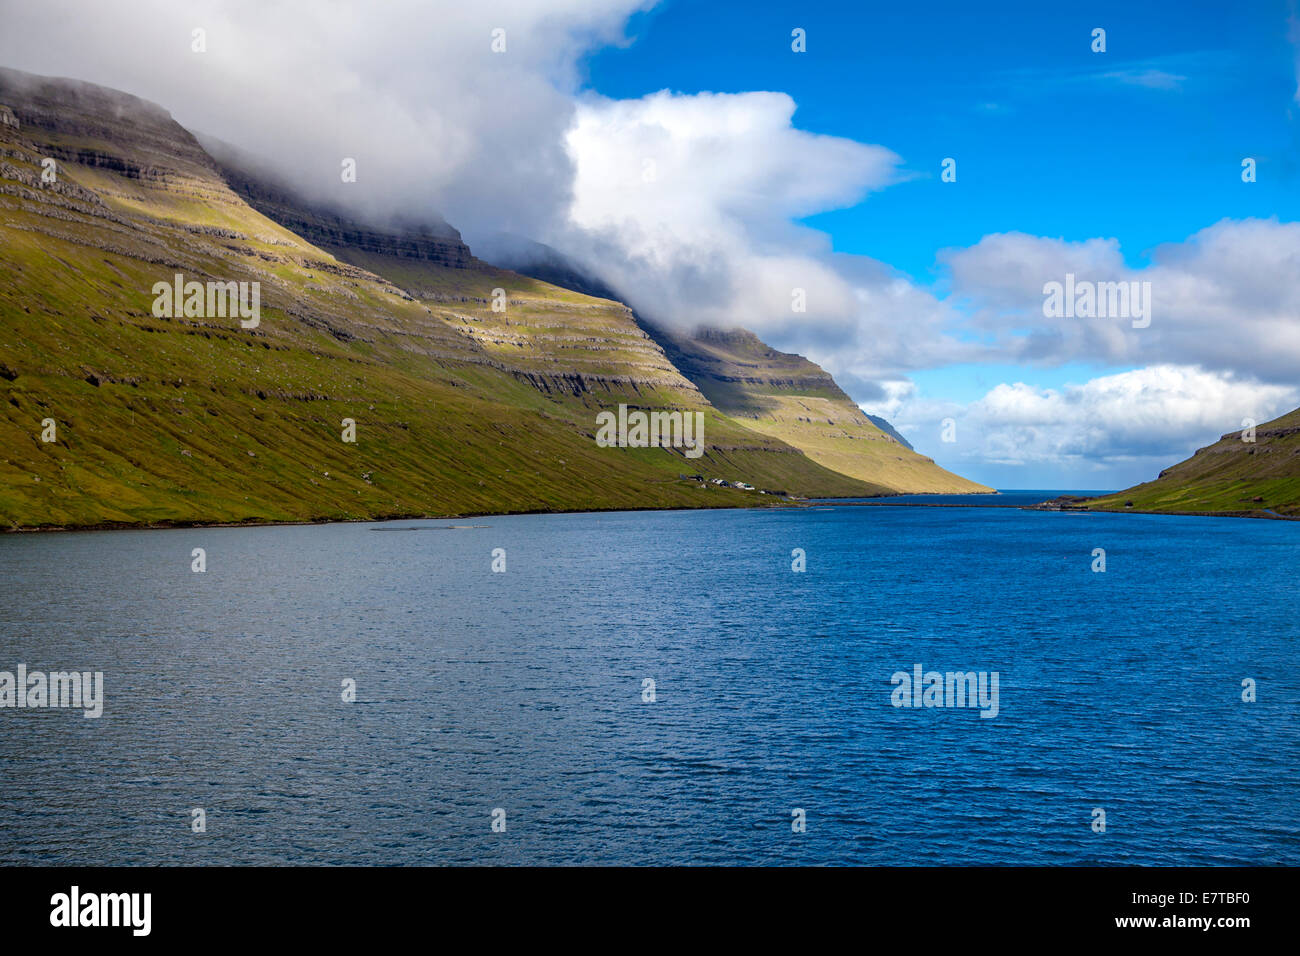 Landscape of part of the Faroe Islands near Klaksvik in the North Atlantic. Stock Photo